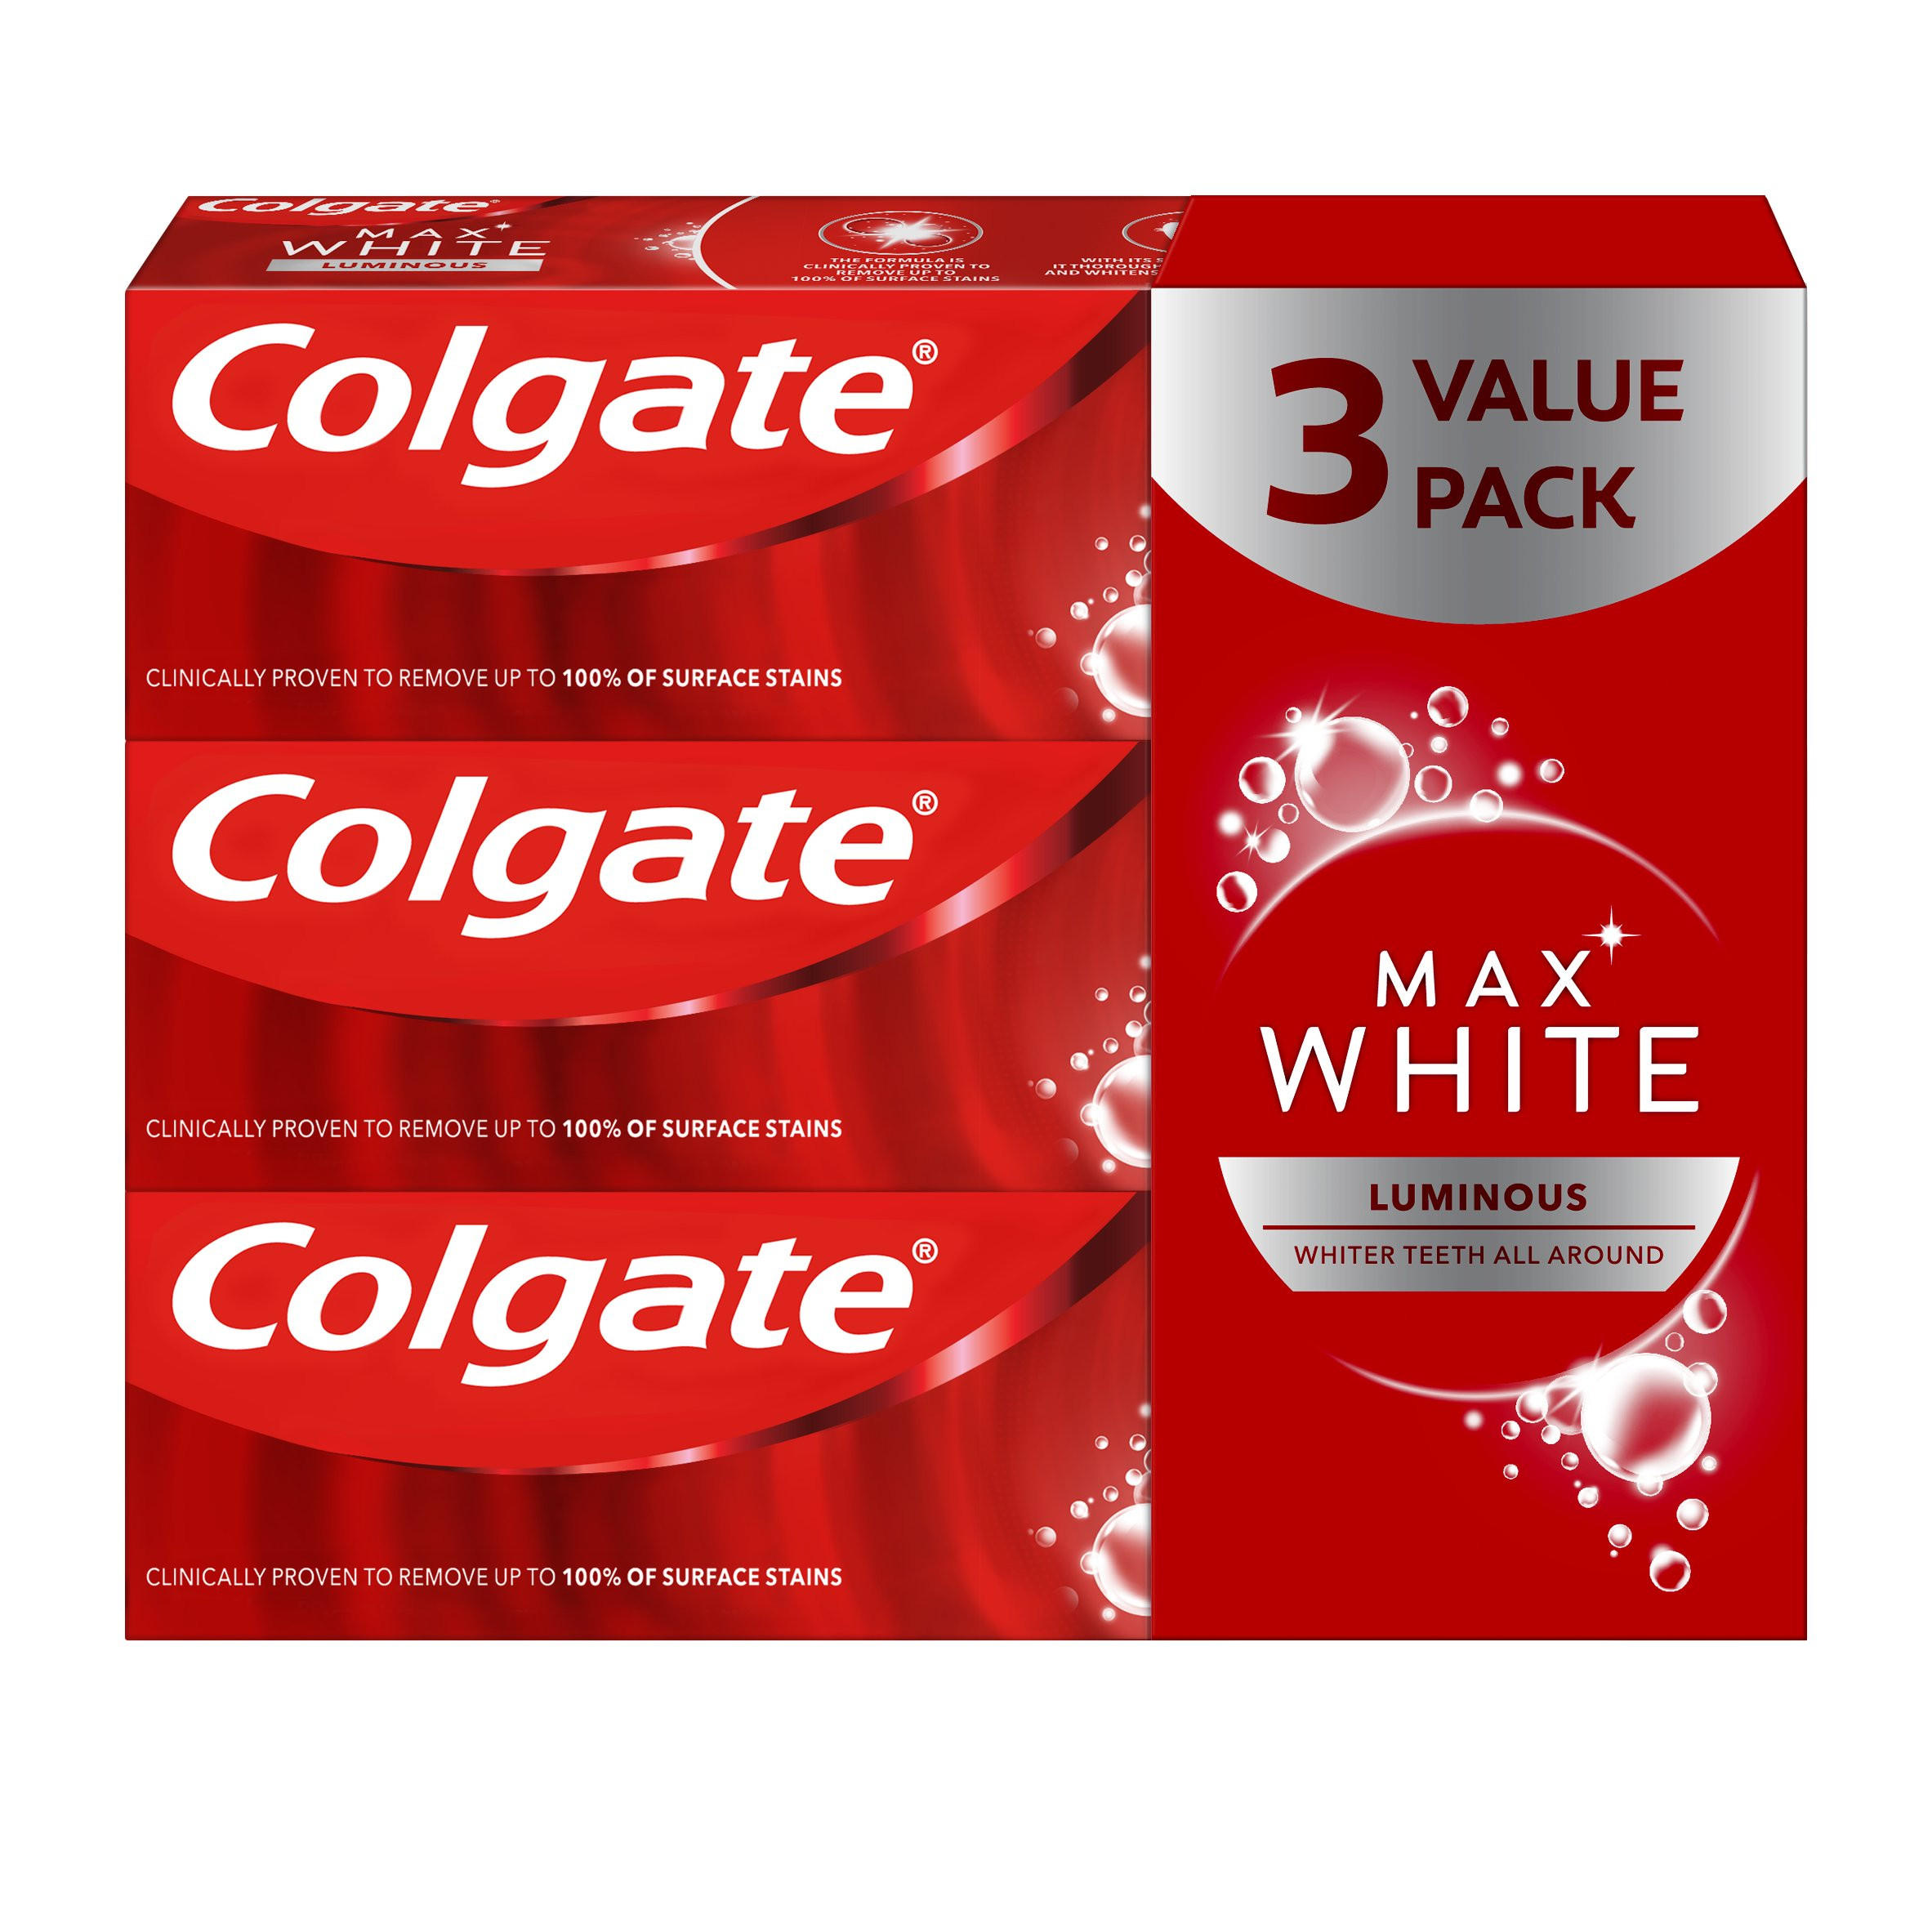 Colgate Max White Luminous Whitening Toothpaste Value Pack 3 x 75ml, Dental Care